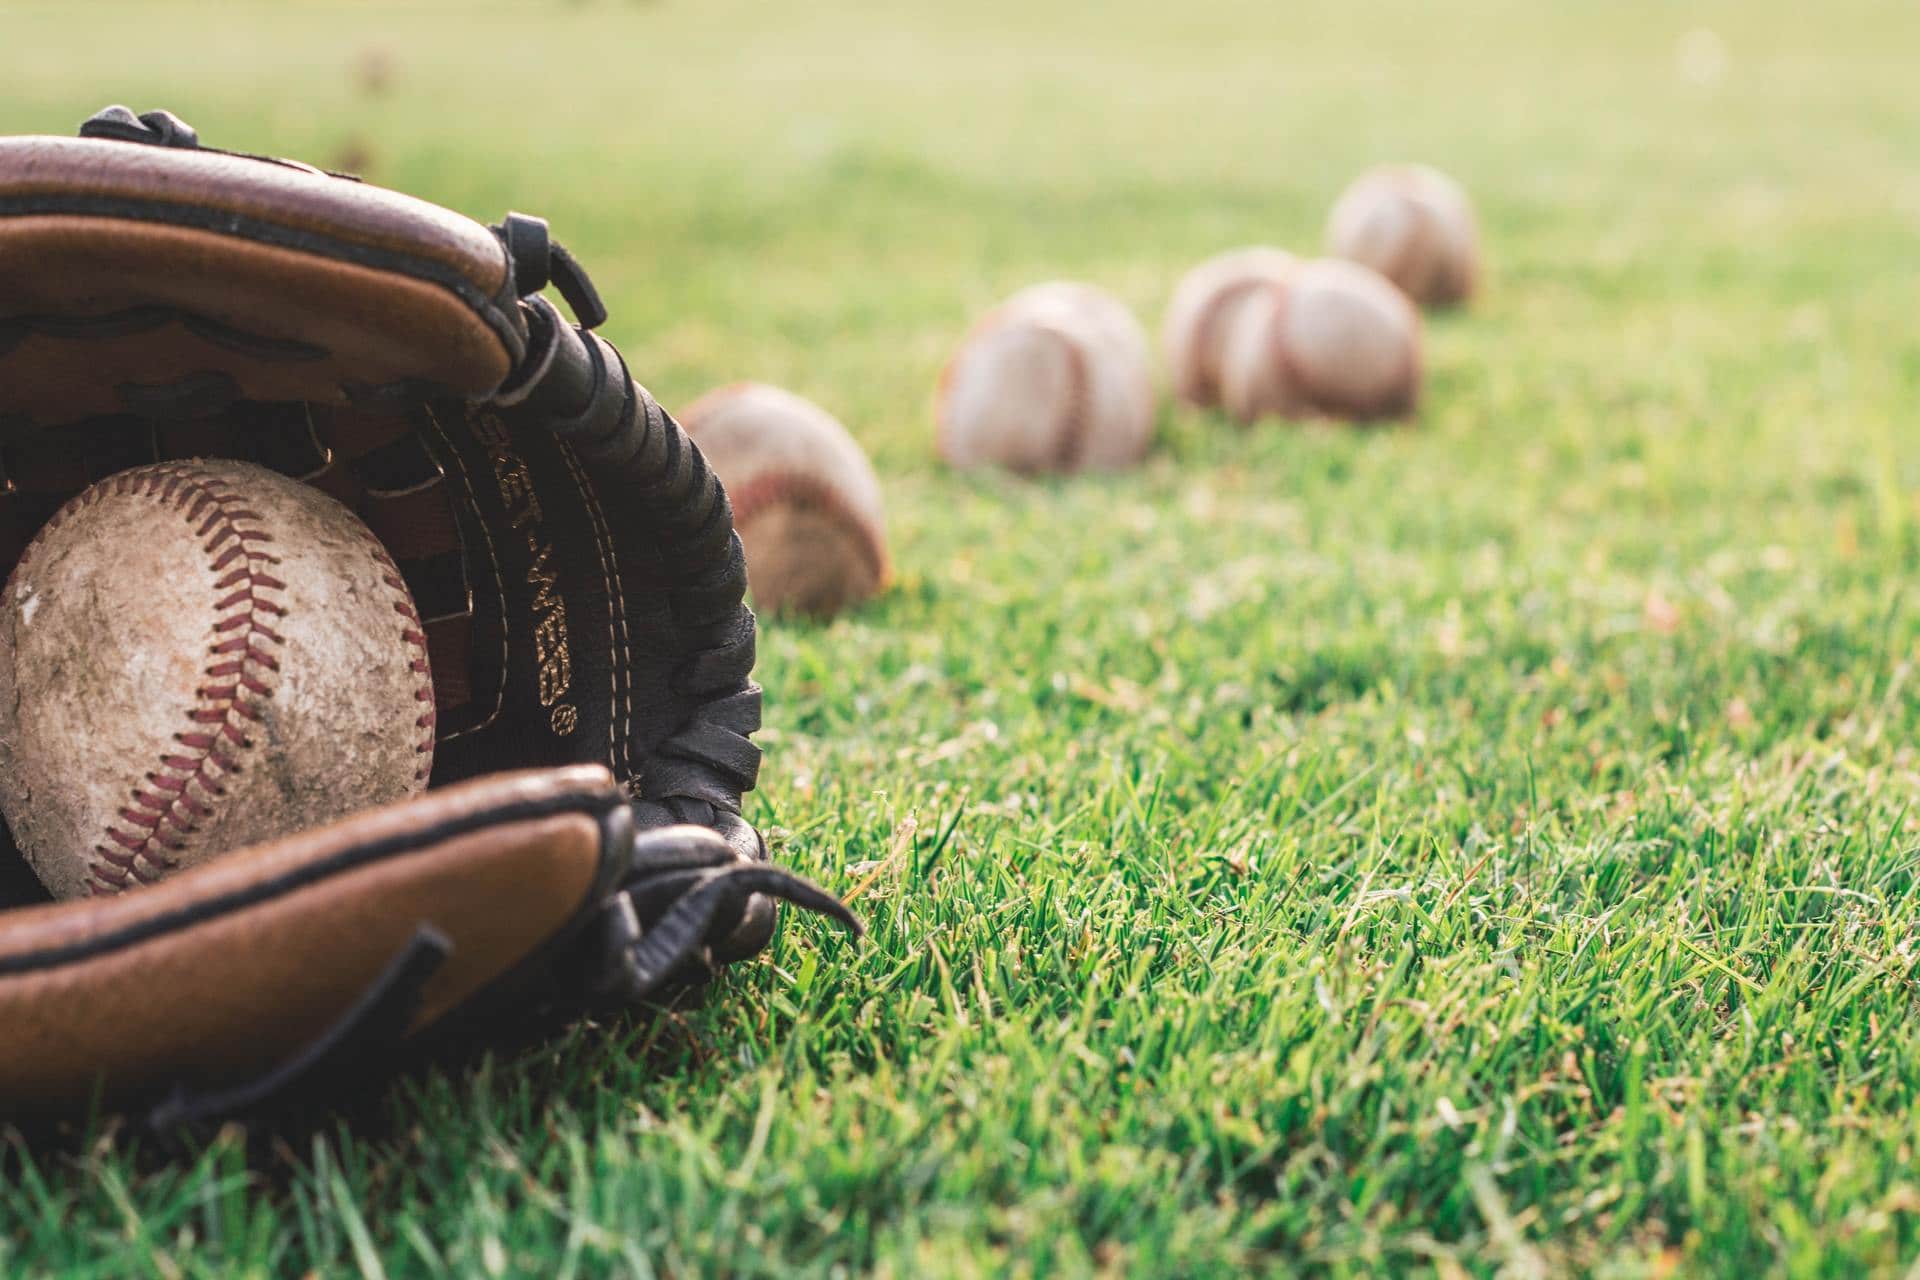 Baseball glove and baseballs lying in the grass